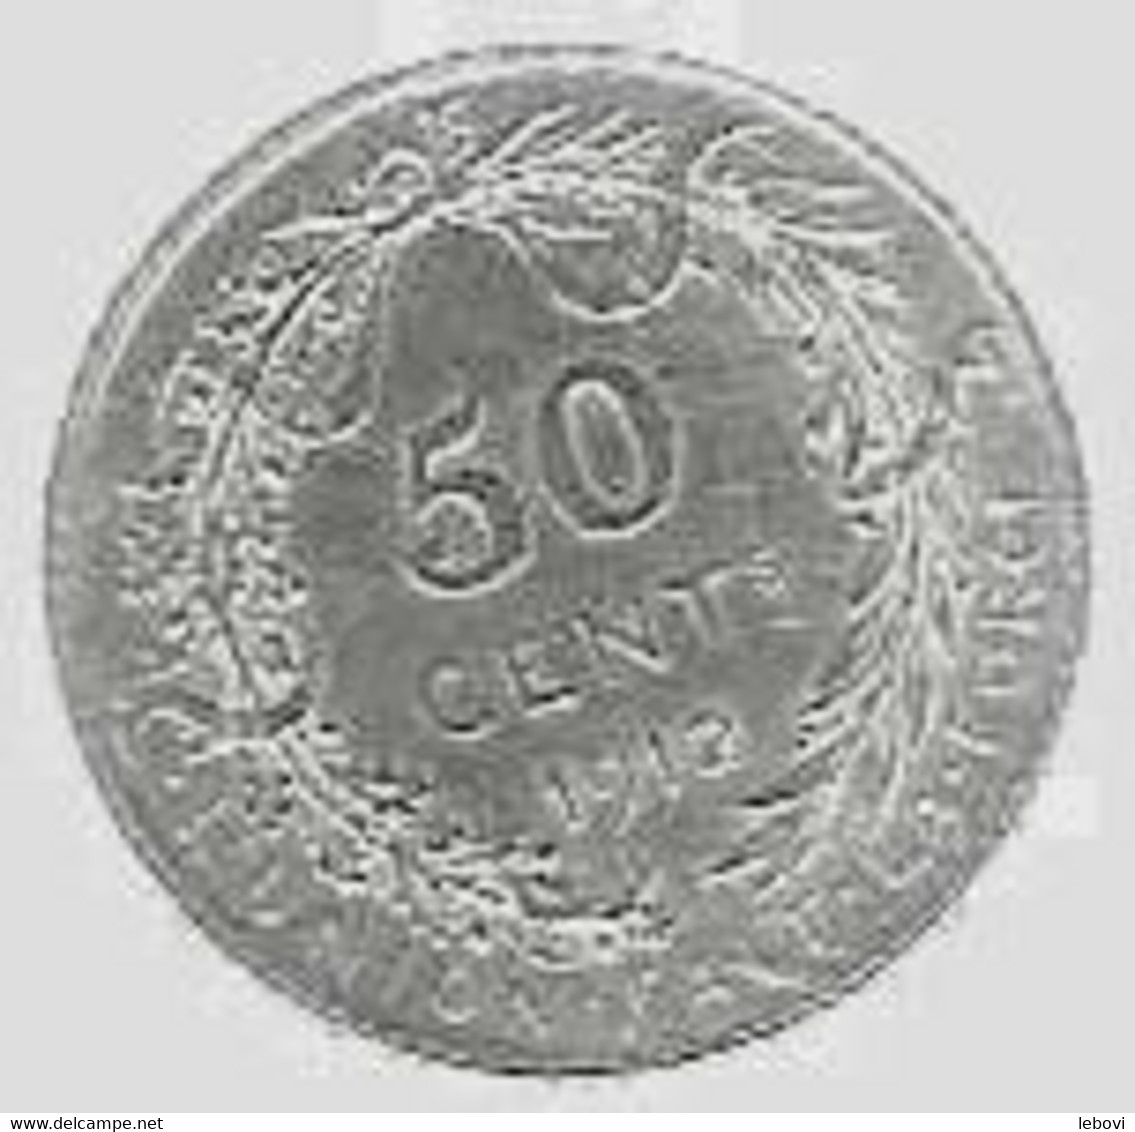 ALBERT I - 50 Centimes 1912 FR - 50 Cents